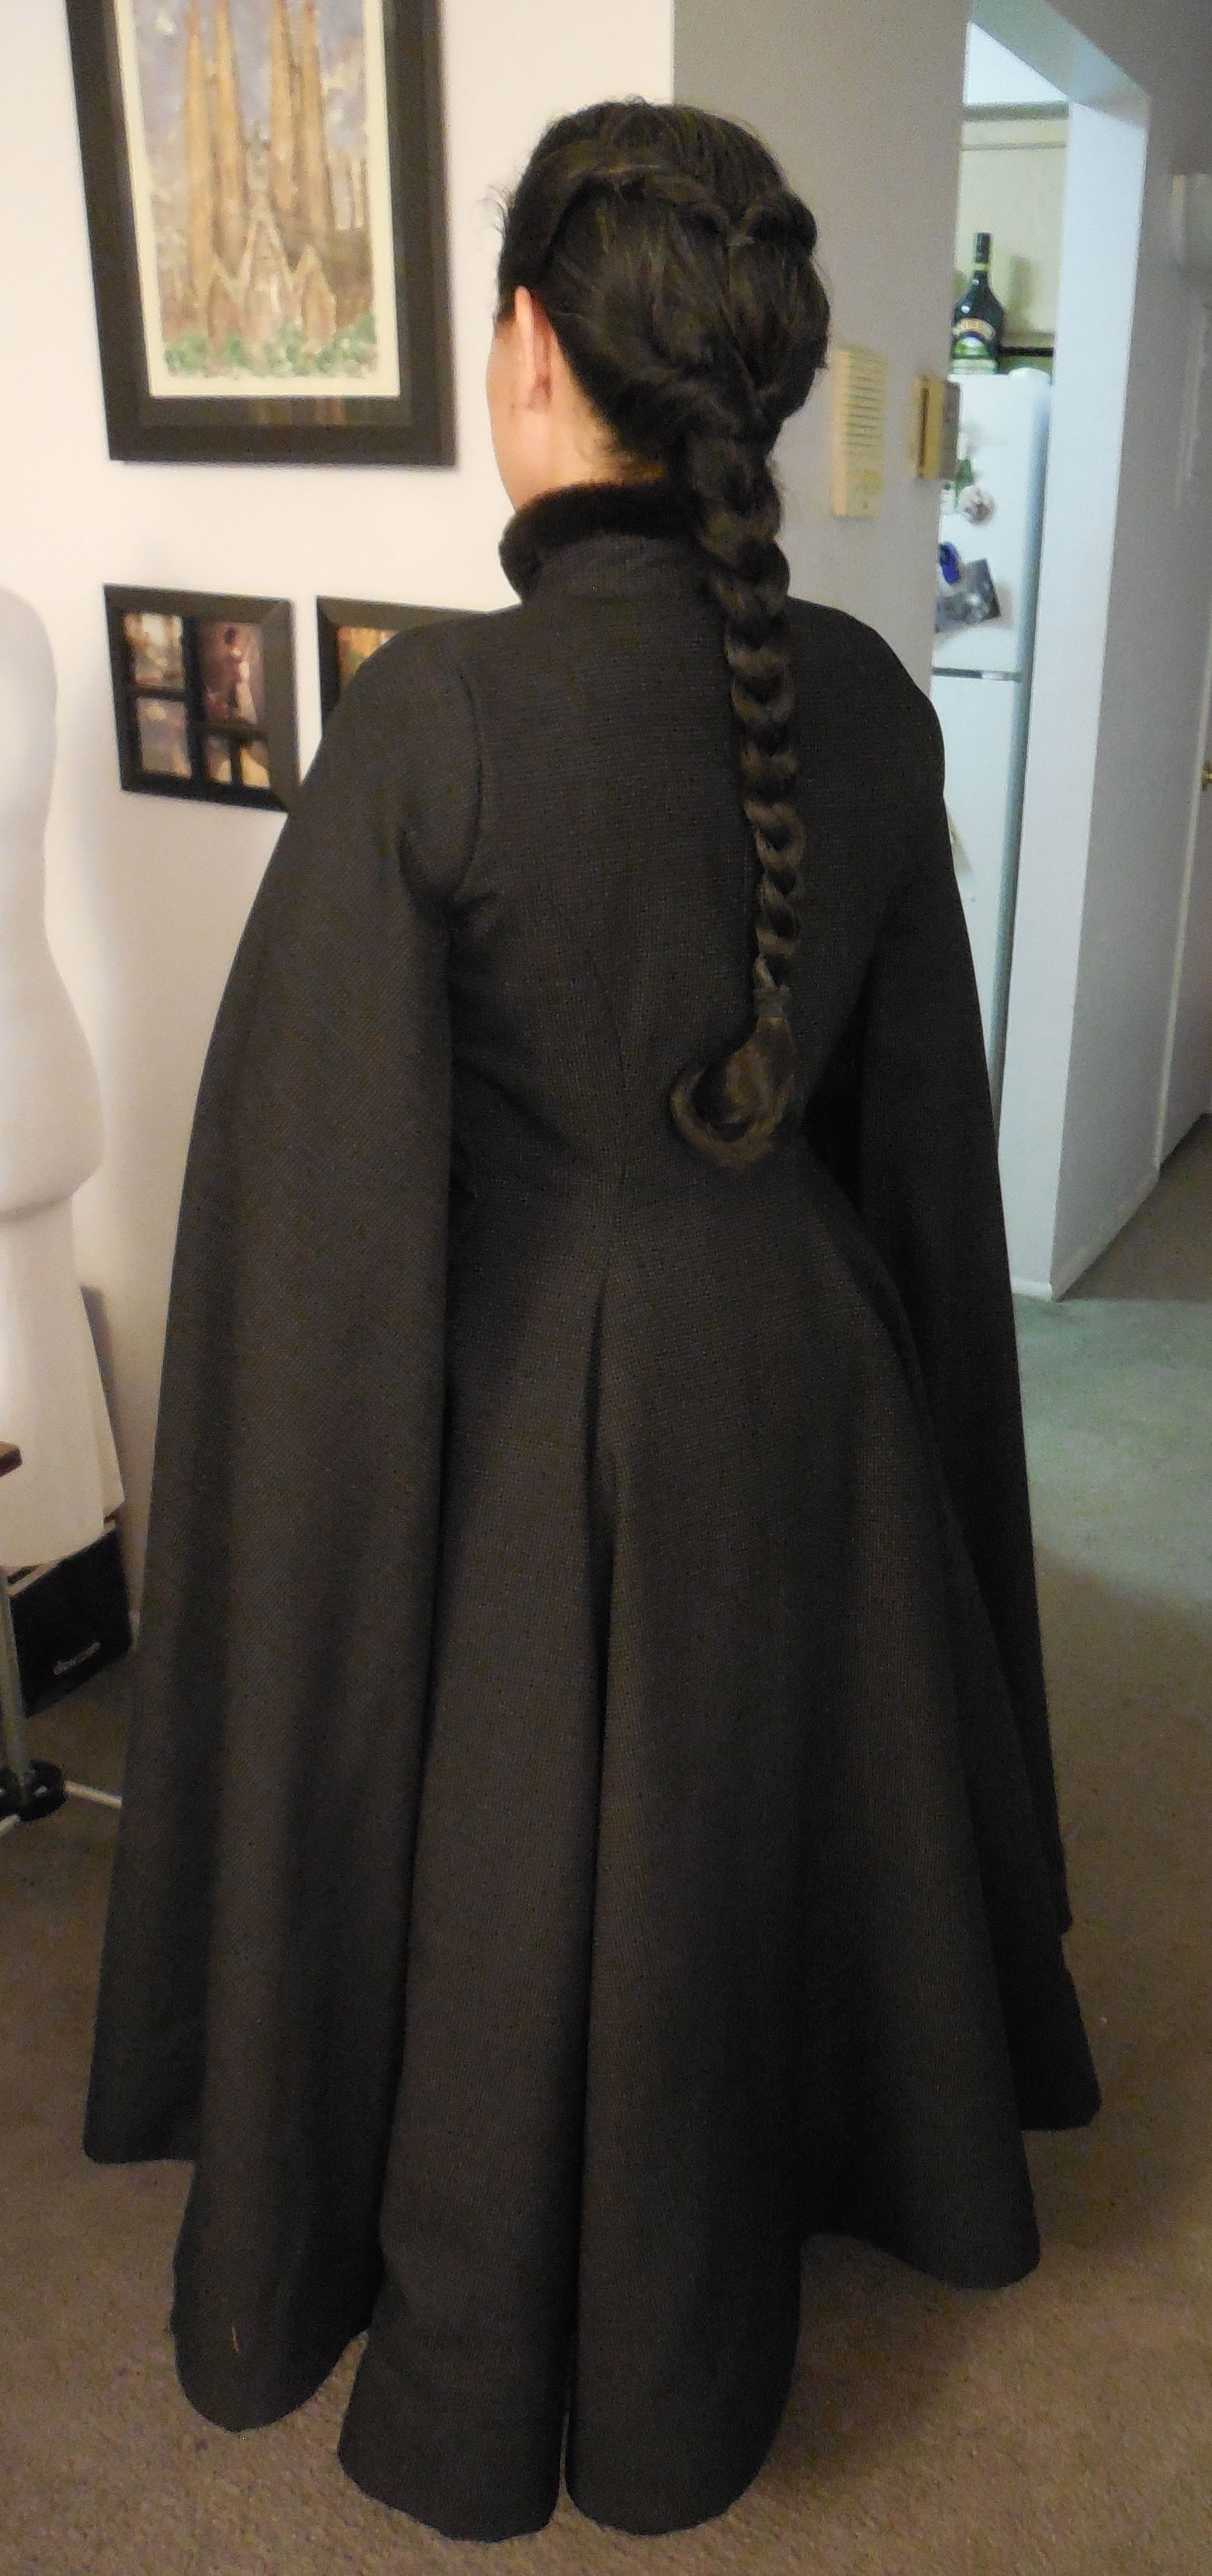 Best ideas about Sansa Stark Costume DIY
. Save or Pin Sansa Stark Game of Thrones Cosplay Alayne Stone Dark Now.